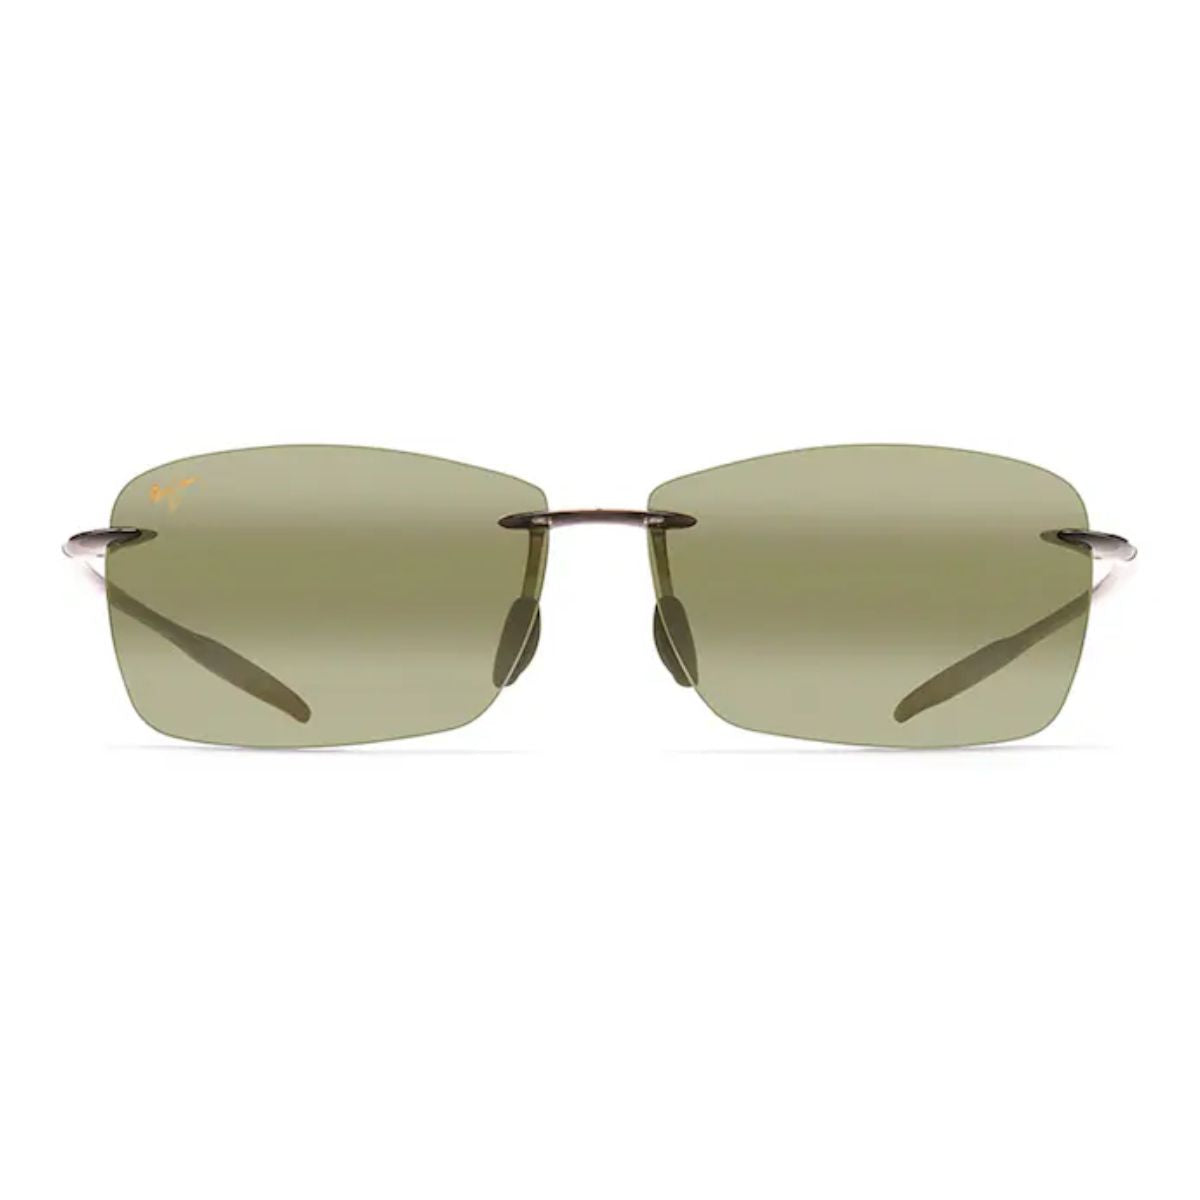 "Shop Stylish Rectangle Shape Maui Jim Sunglasses For Men | Offer Goggles For Mens"